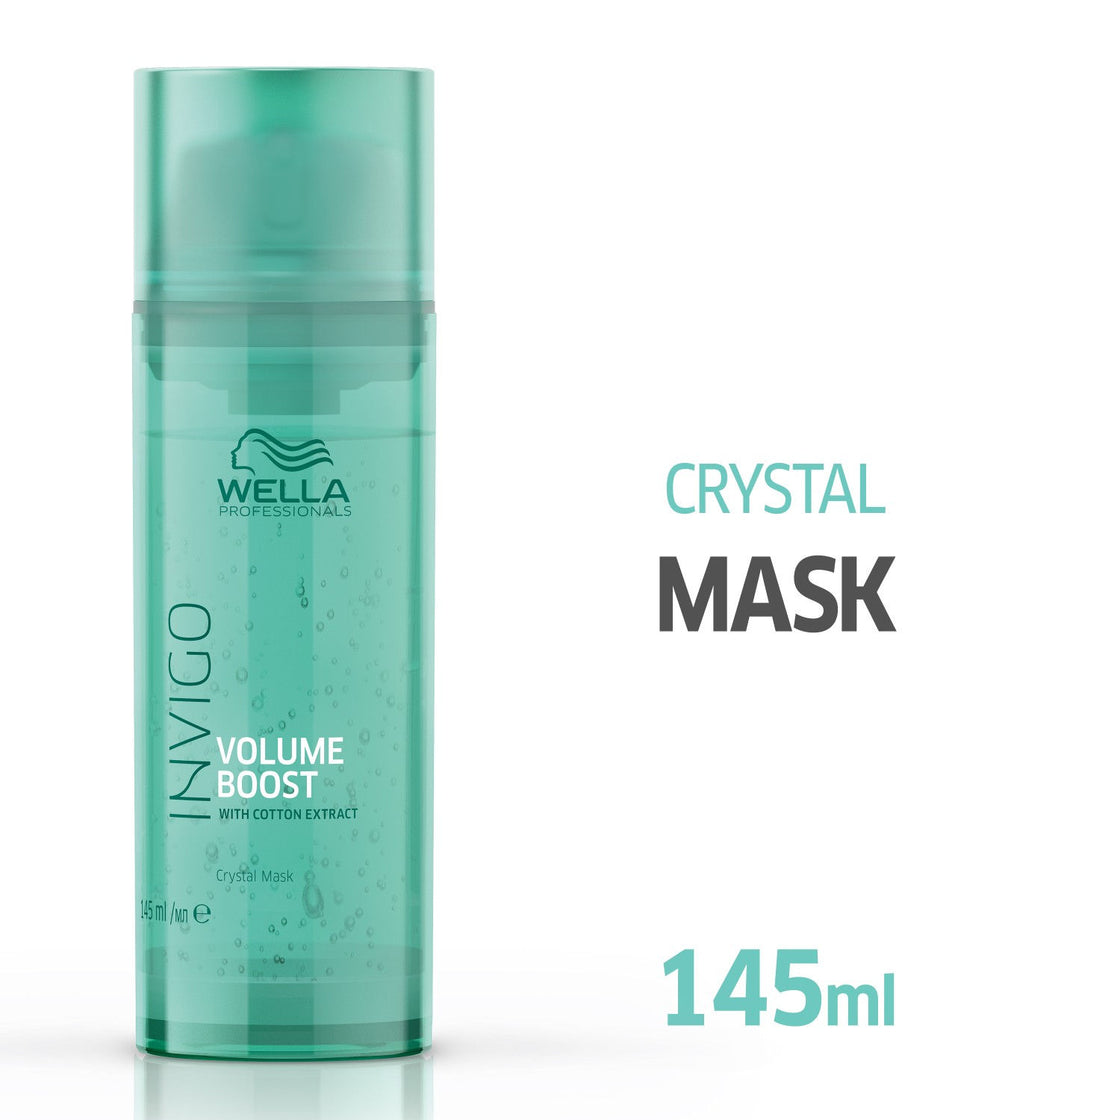 Wella Professionals INVIGO Volume Boost Crystal Mask (145ml)